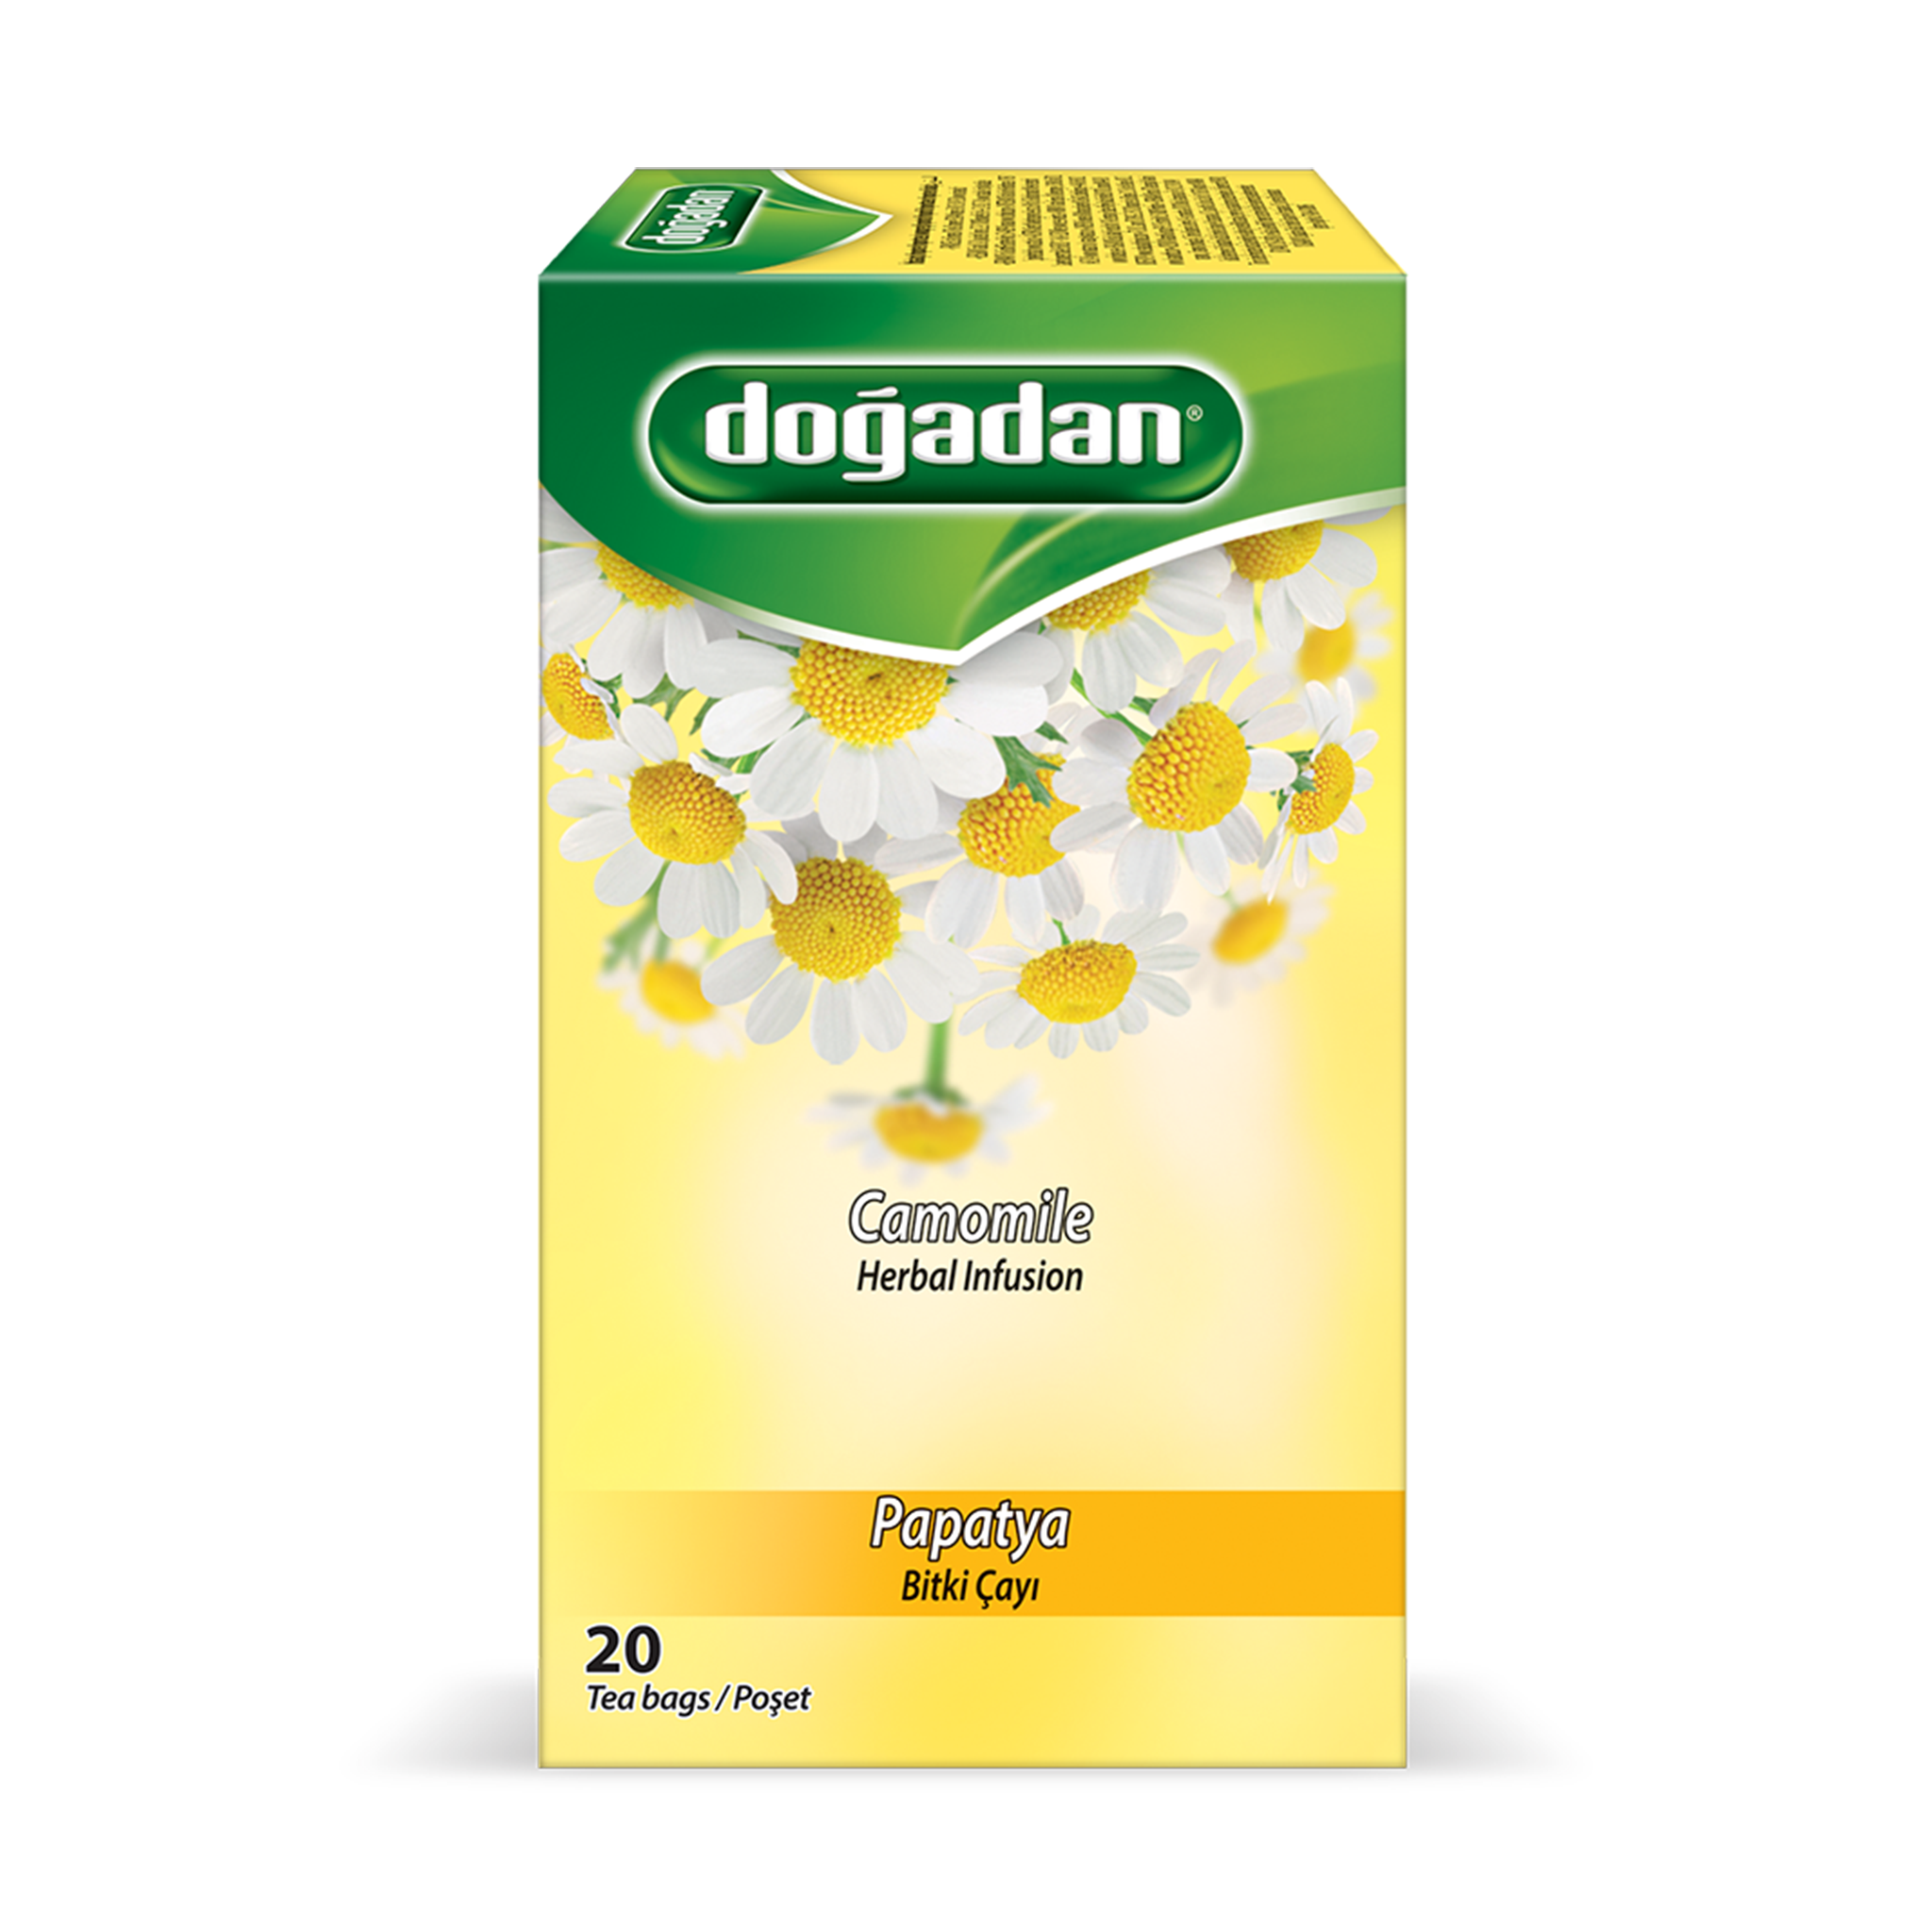 Dogadan Camomile Herbal Tea 1.5g×20P | Dogadan Papatya Bitki Cayi | Camomile Herbal Infusion